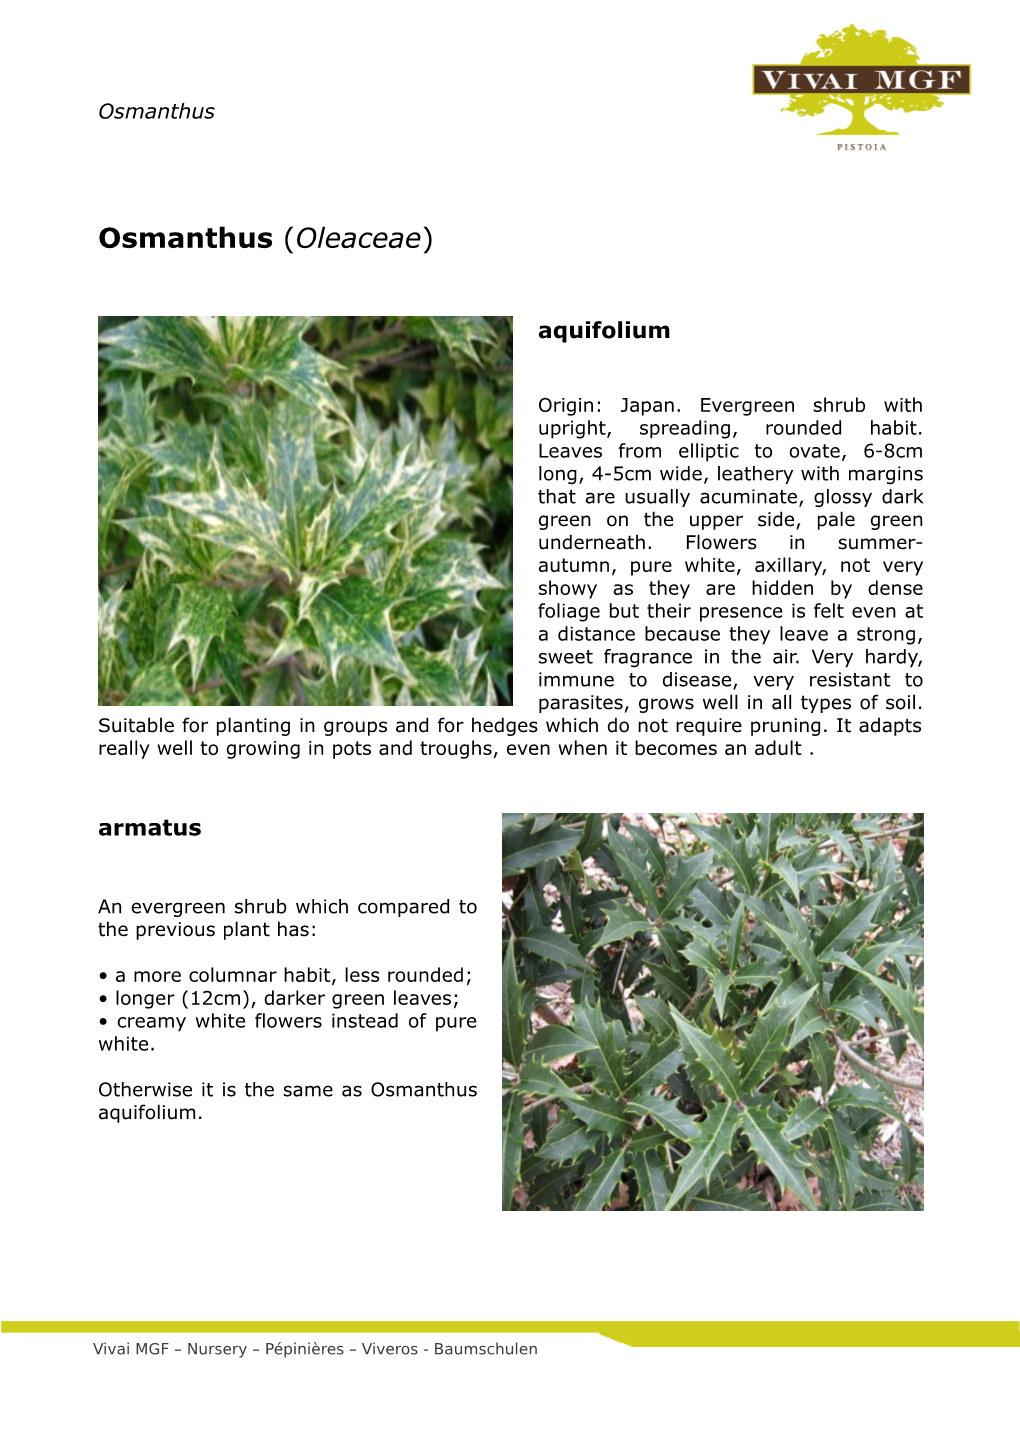 Osmanthus (Oleaceae)